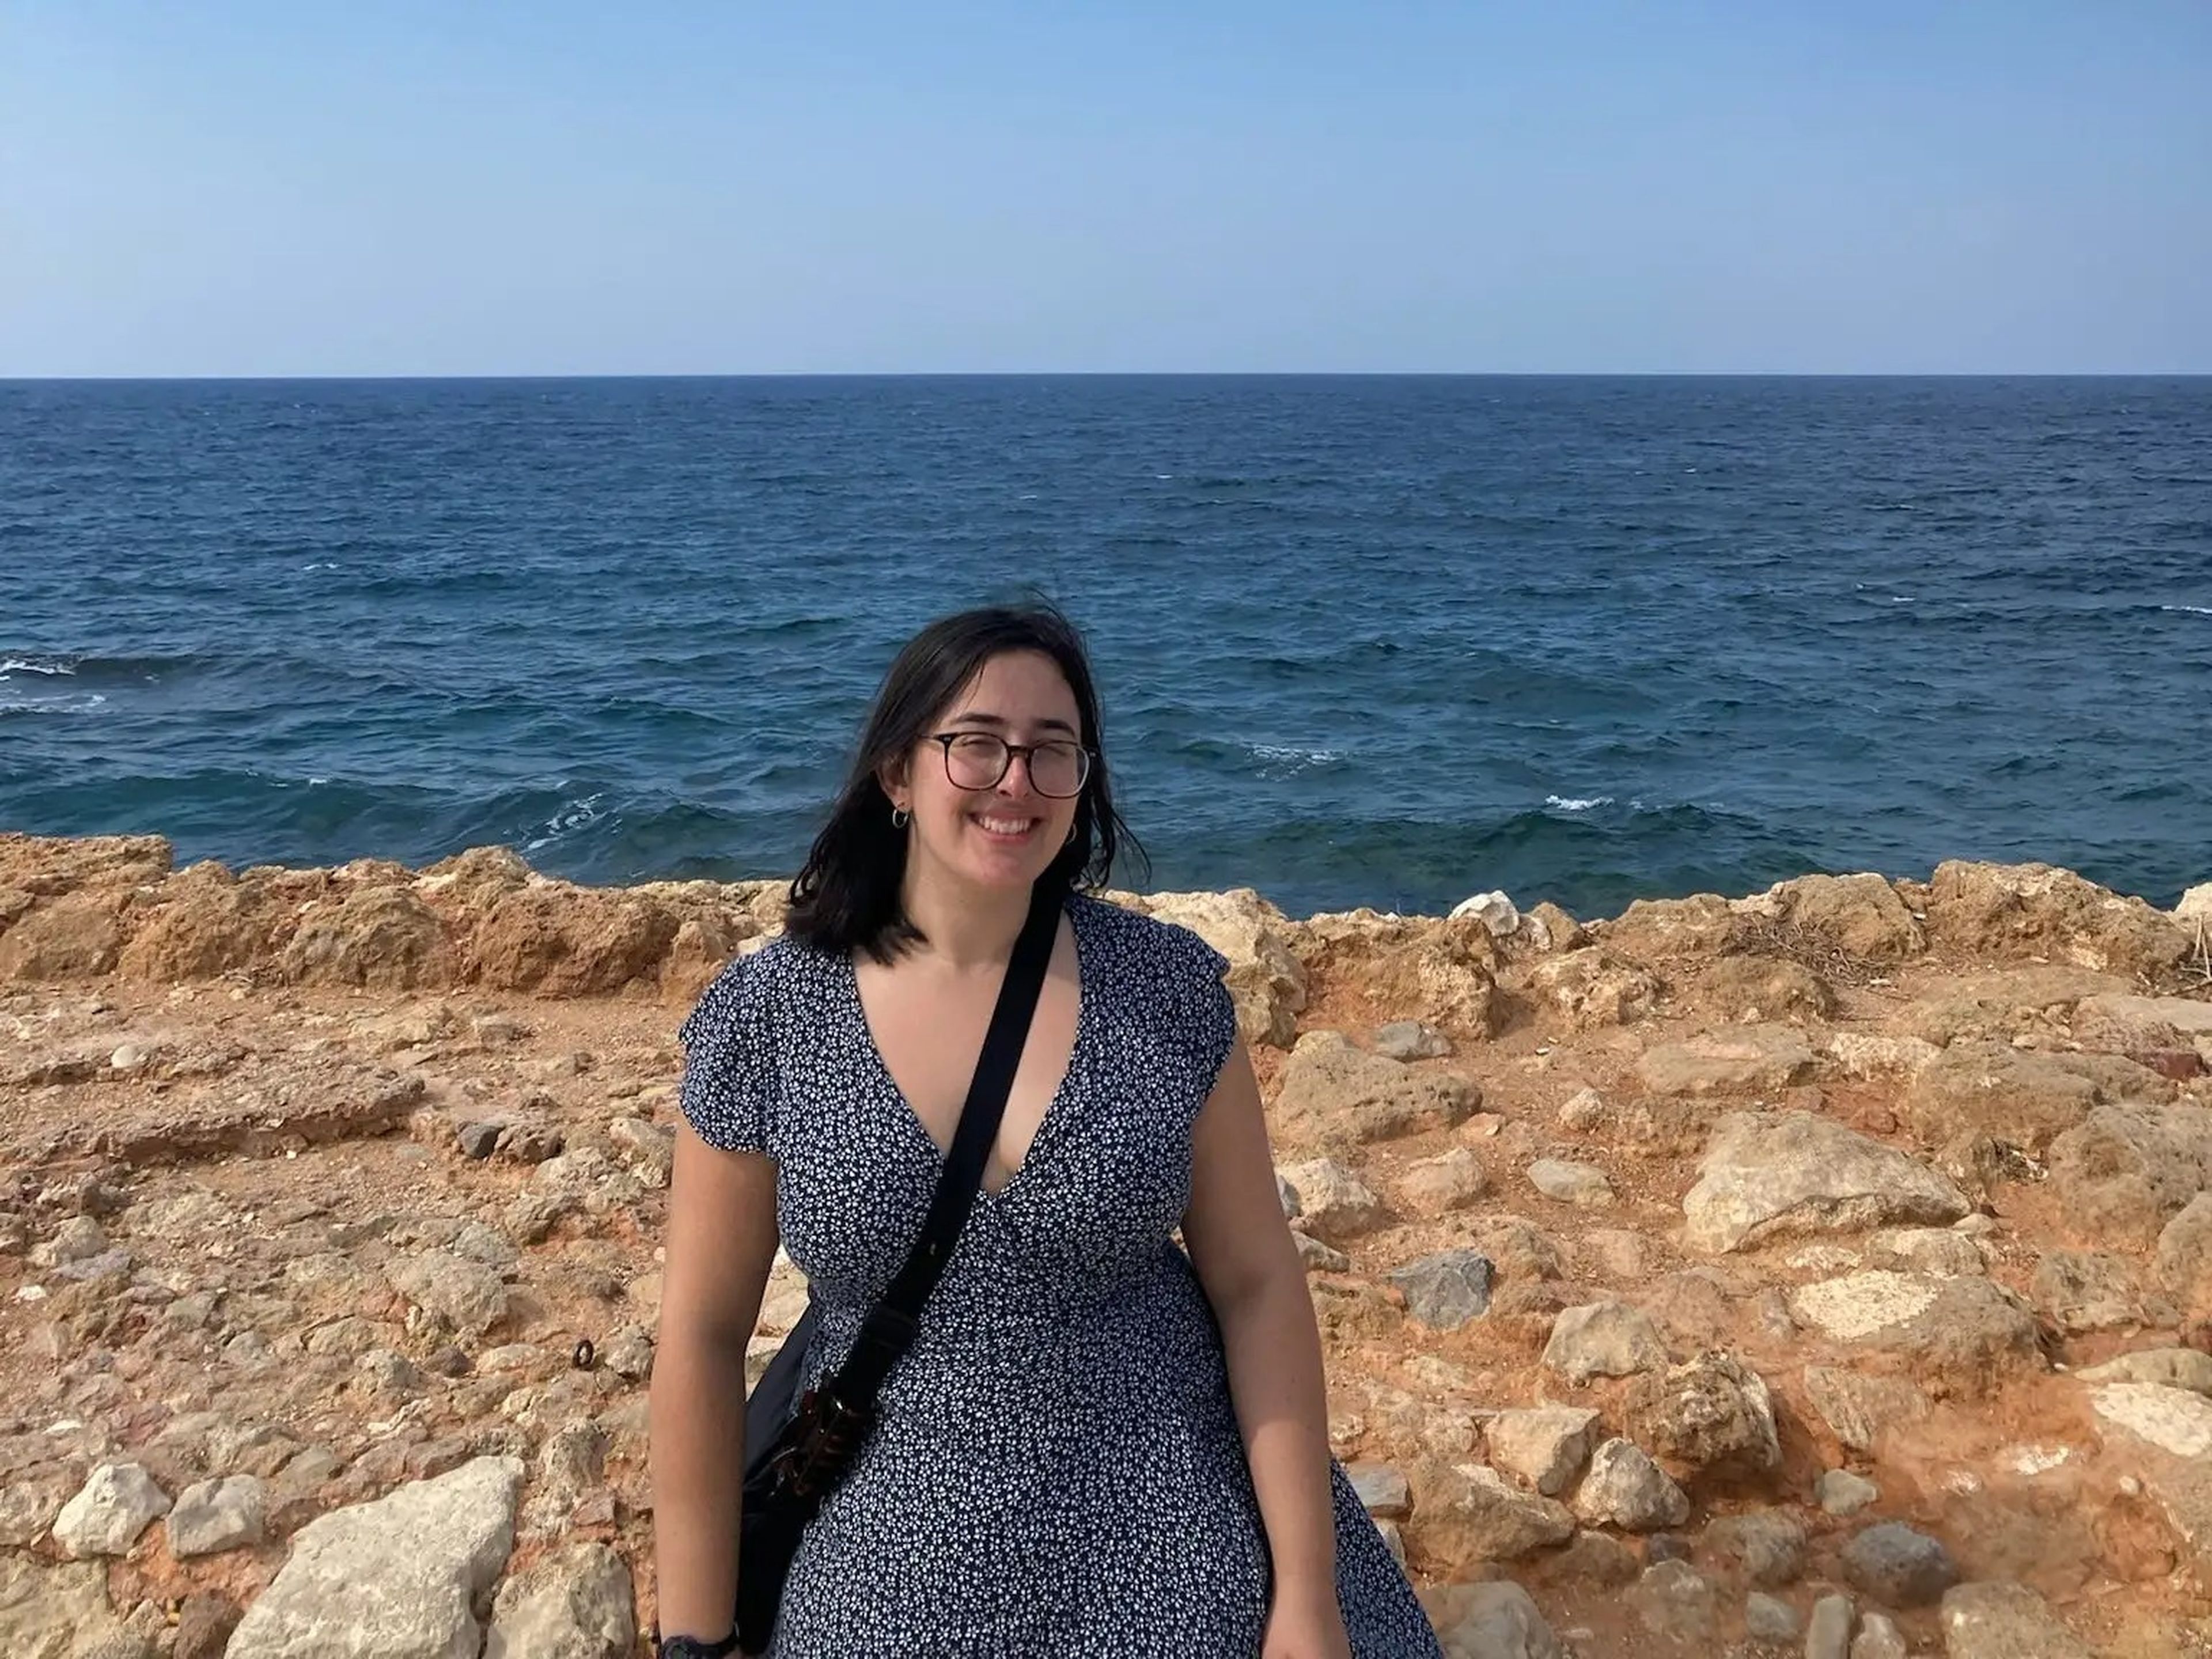 hannah posing next to the ocean in create greece